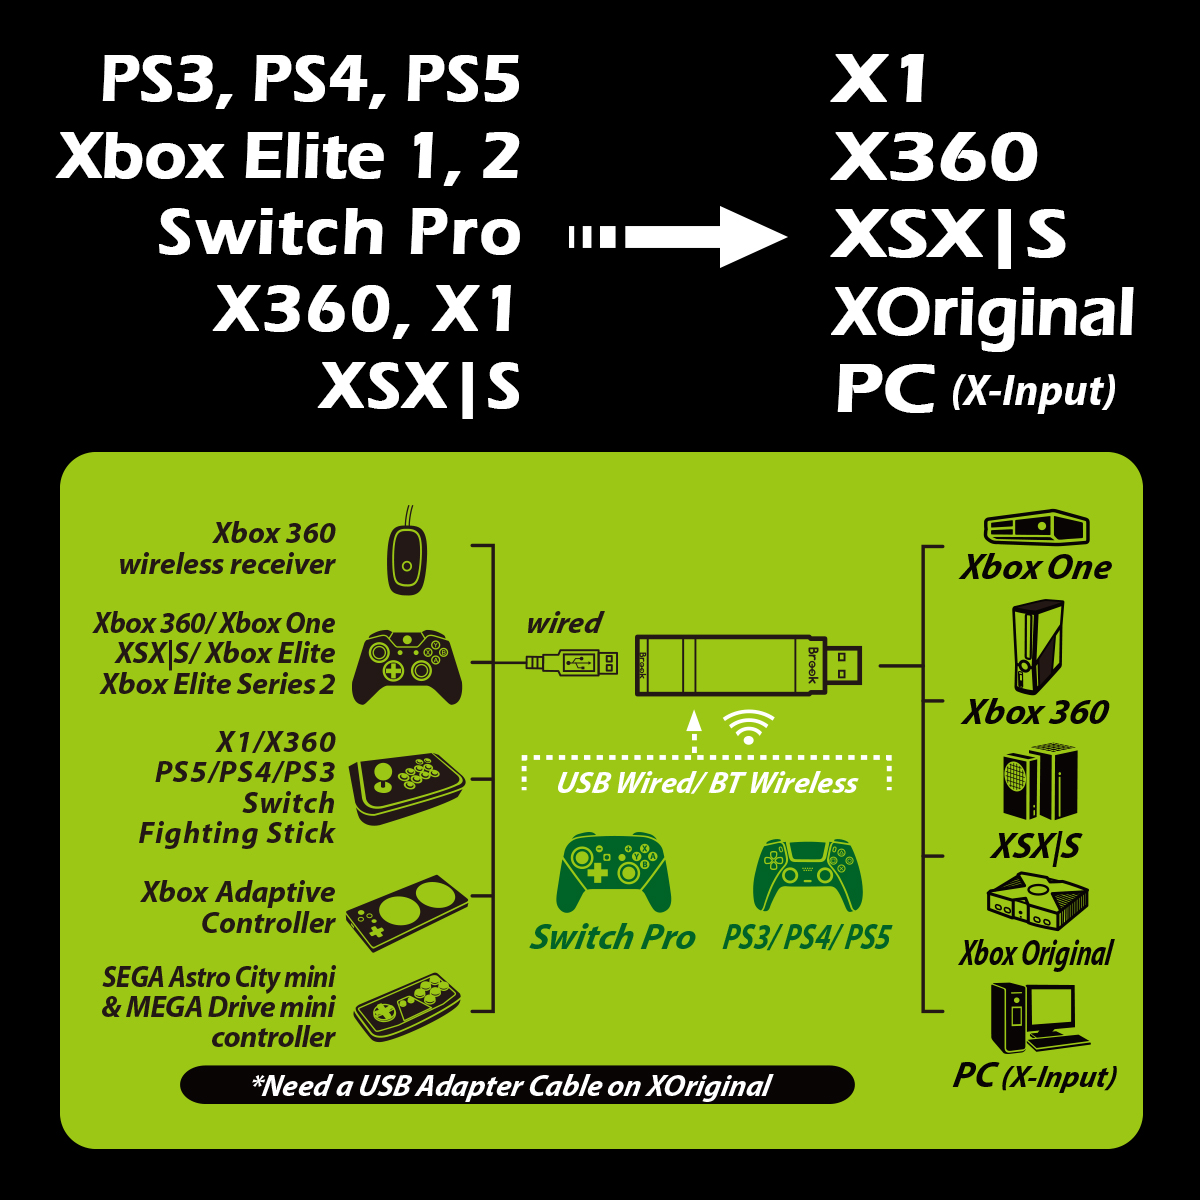 PowerA Xbox 360 Pro Ex Controller Black